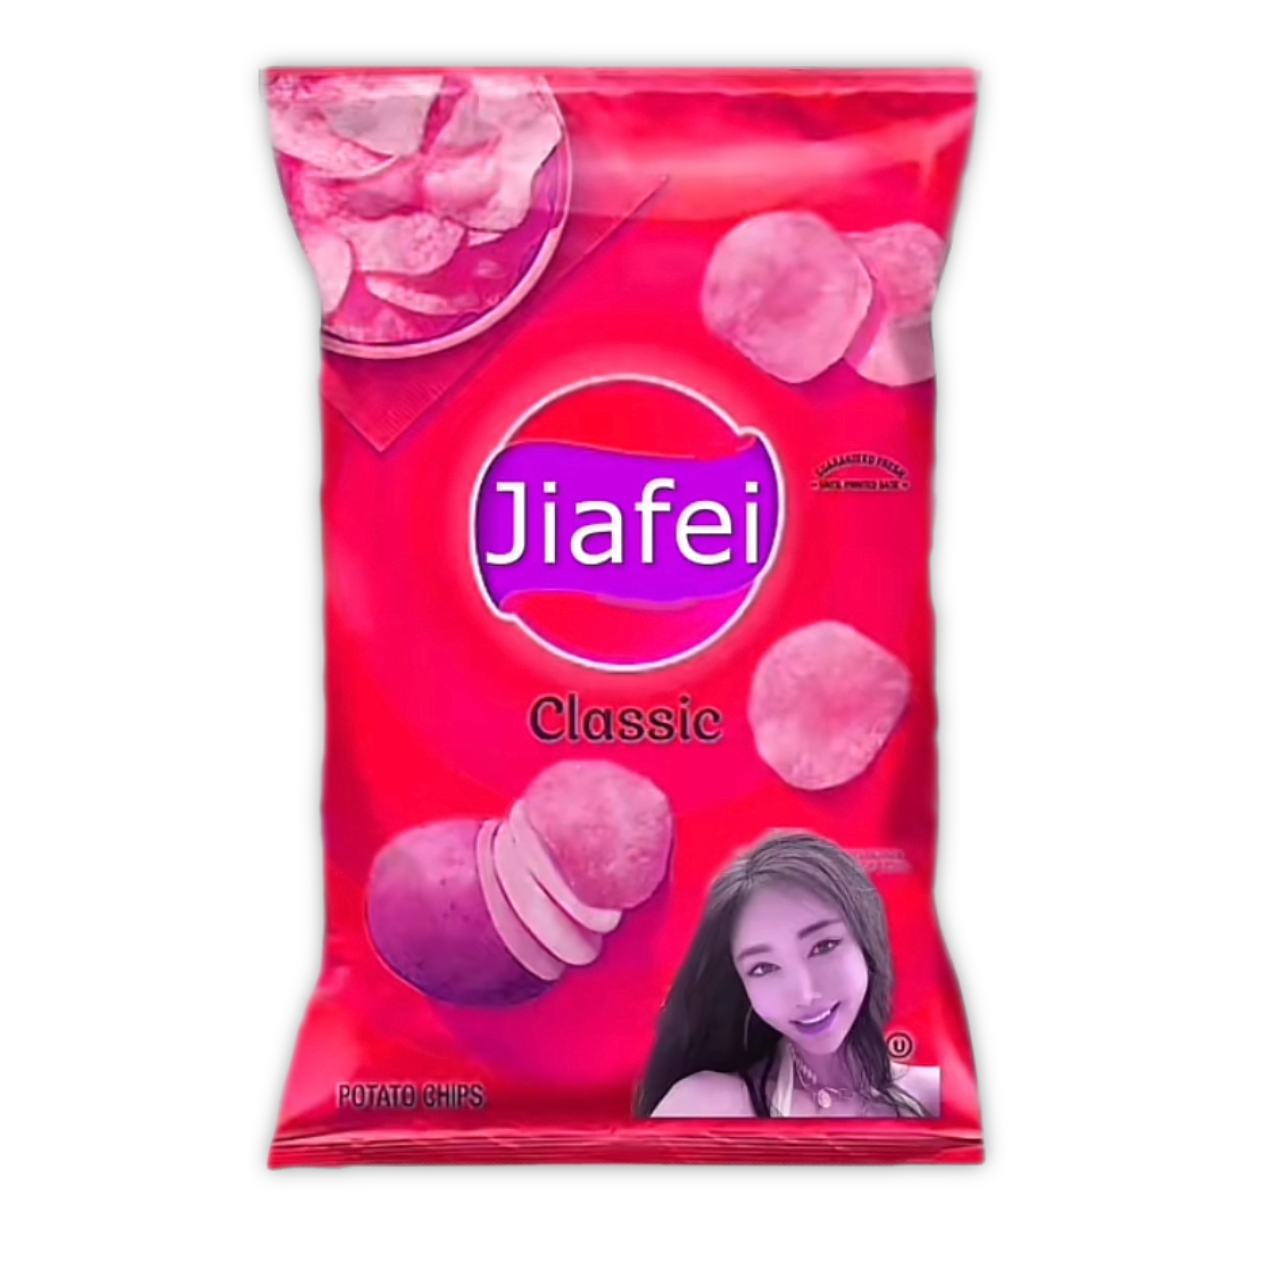 Jiafei Products, Floptok Wiki